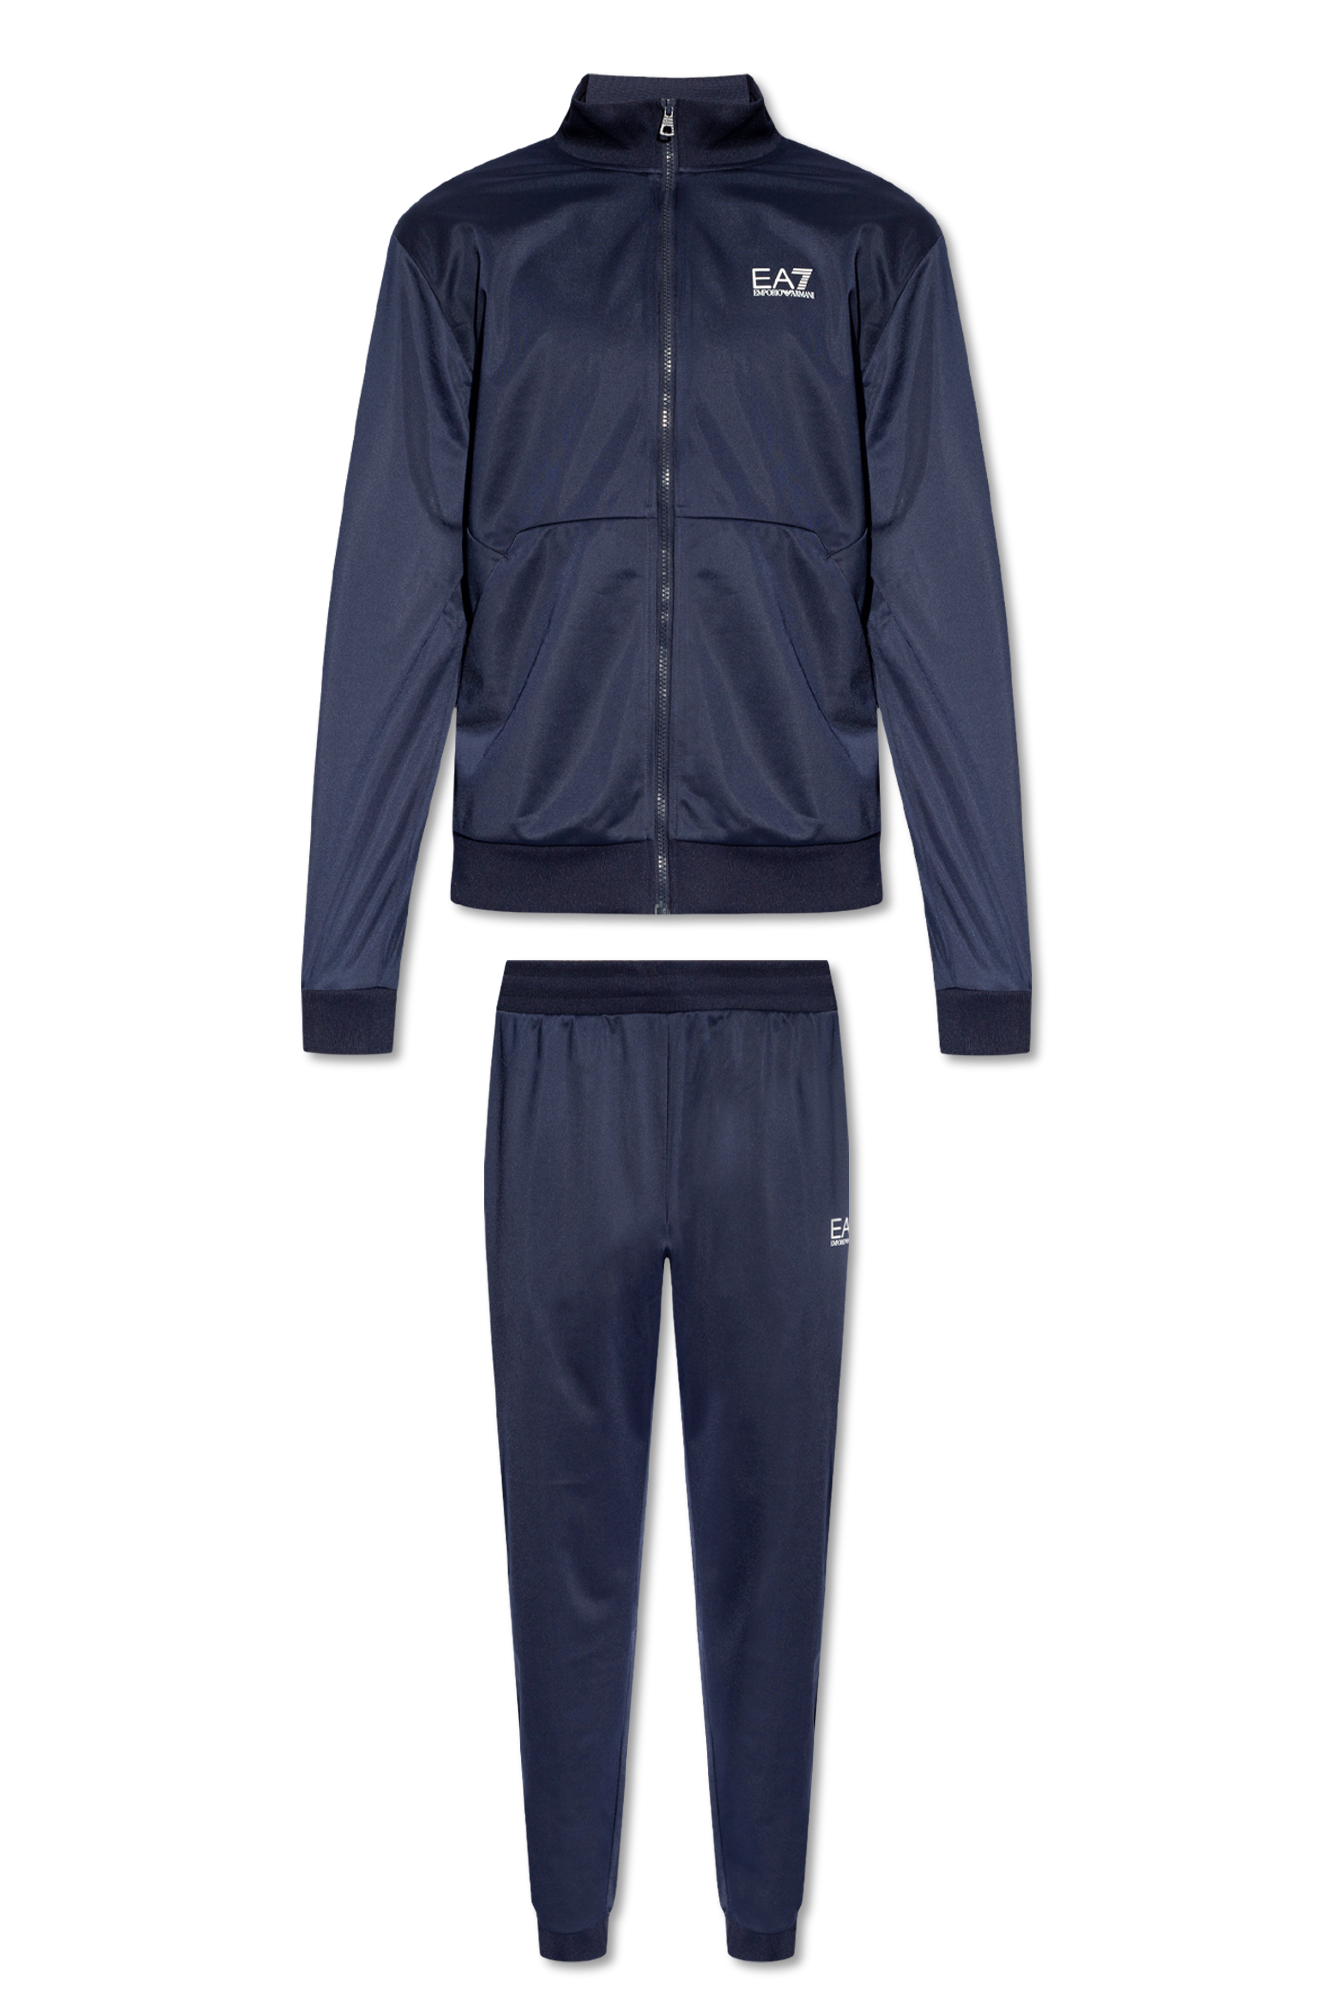 EA7 Emporio Armani Sweatshirt & sweatpants set, Men's Clothing